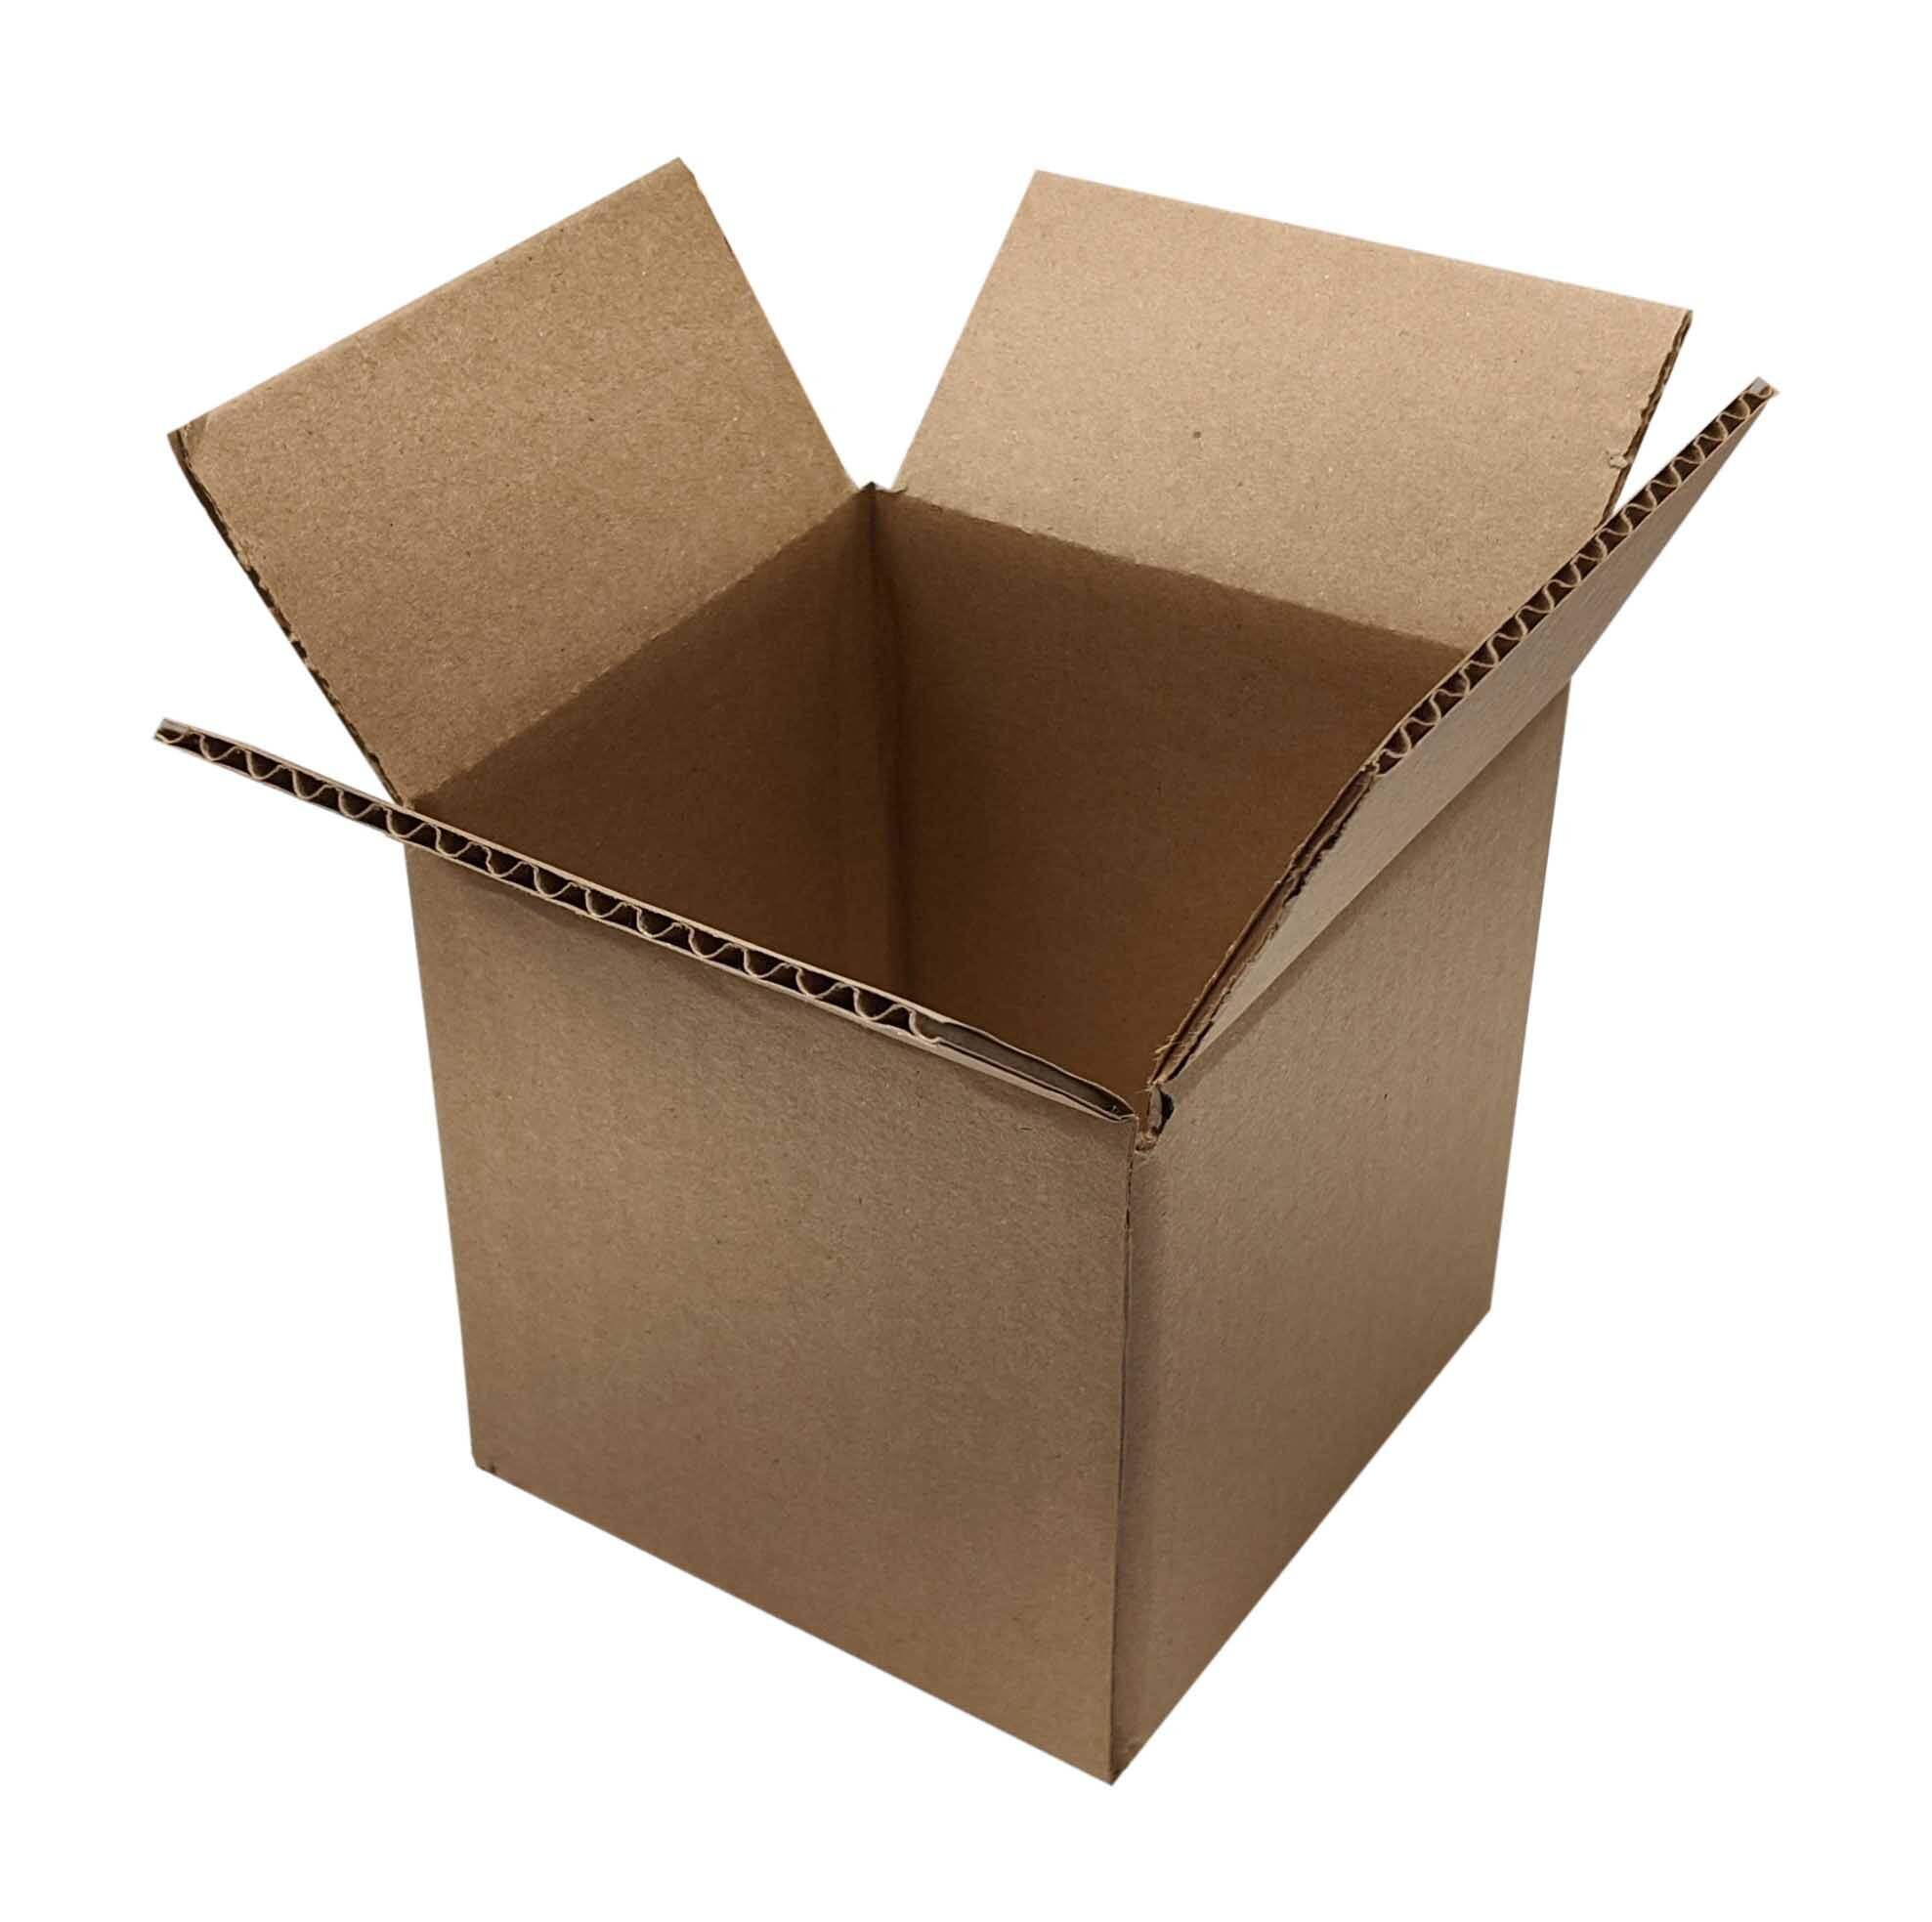 5" x 5" x 5" Corrugated Cardboard Boxes - 25 Boxes/Bundle